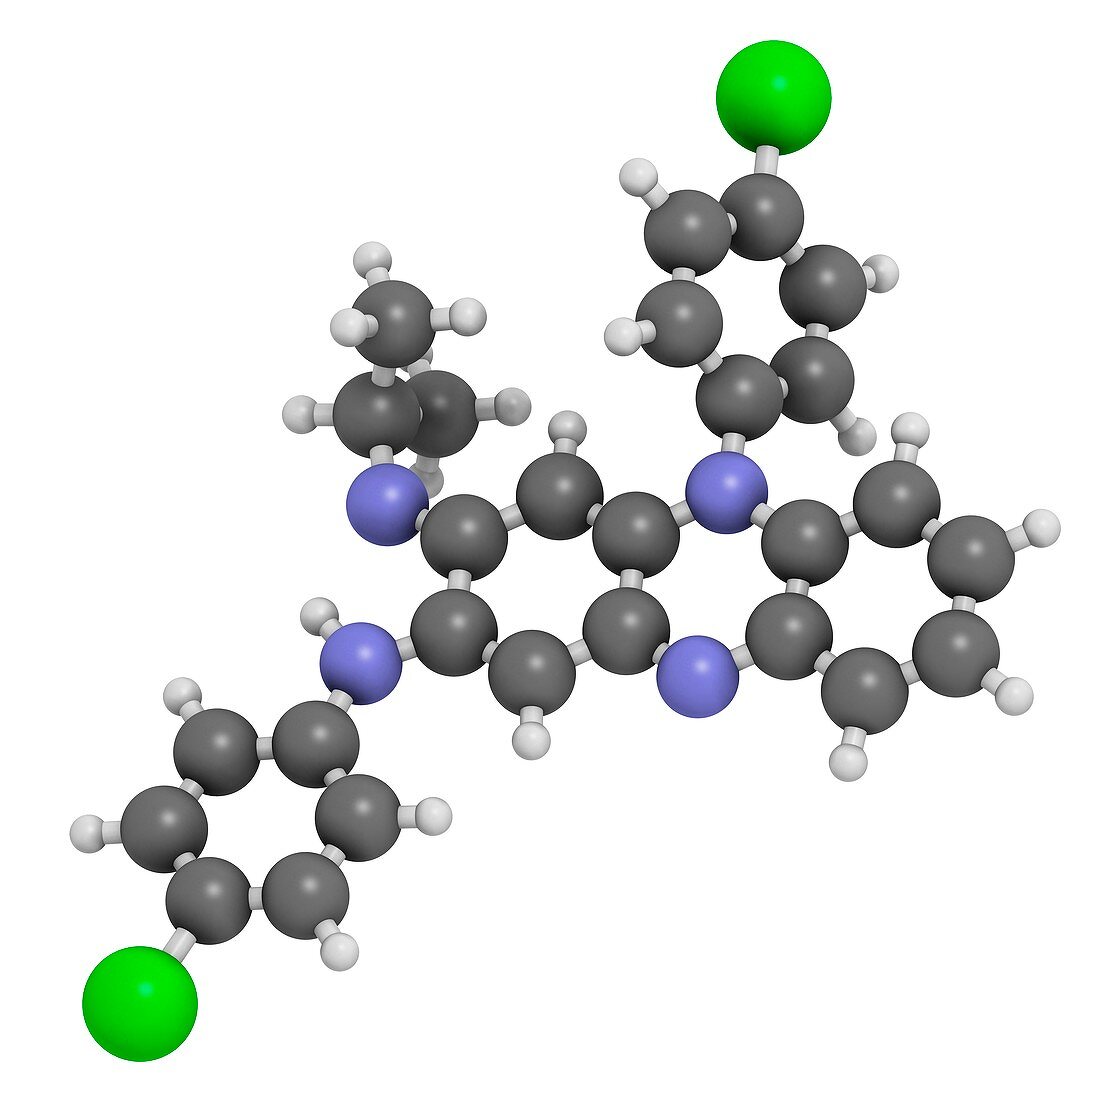 Clofazimine leprosy drug molecule